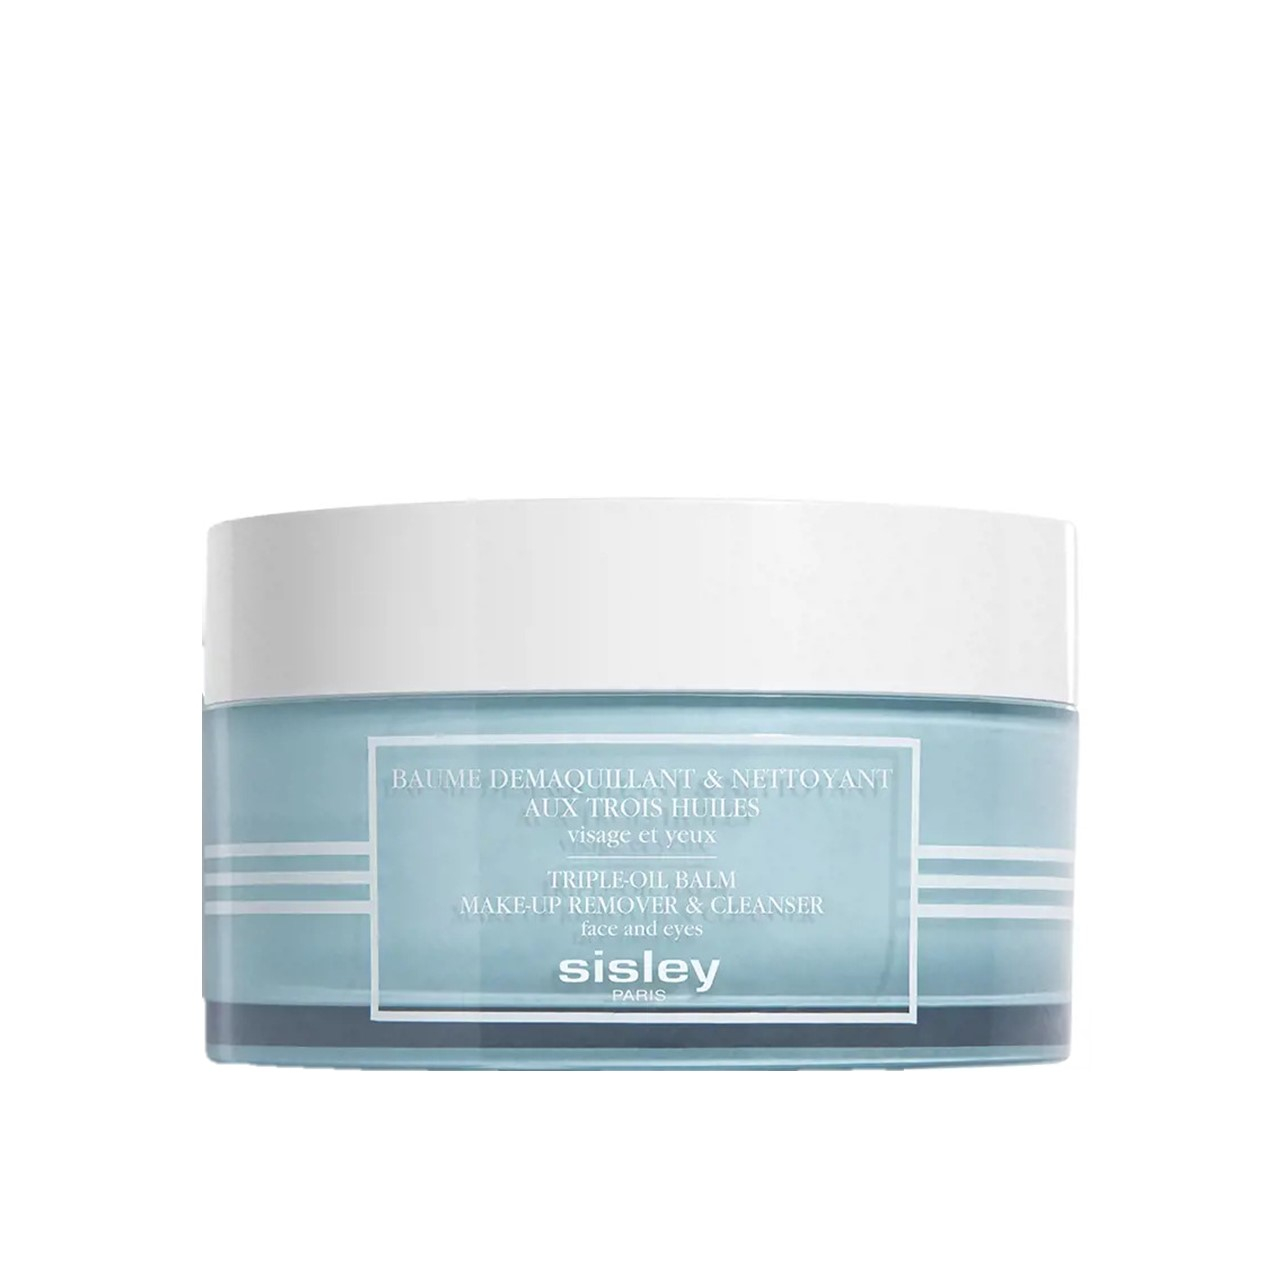 Sisley Paris Triple-Oil Balm Make-Up Remover & Cleanser 125g (4.4 oz)